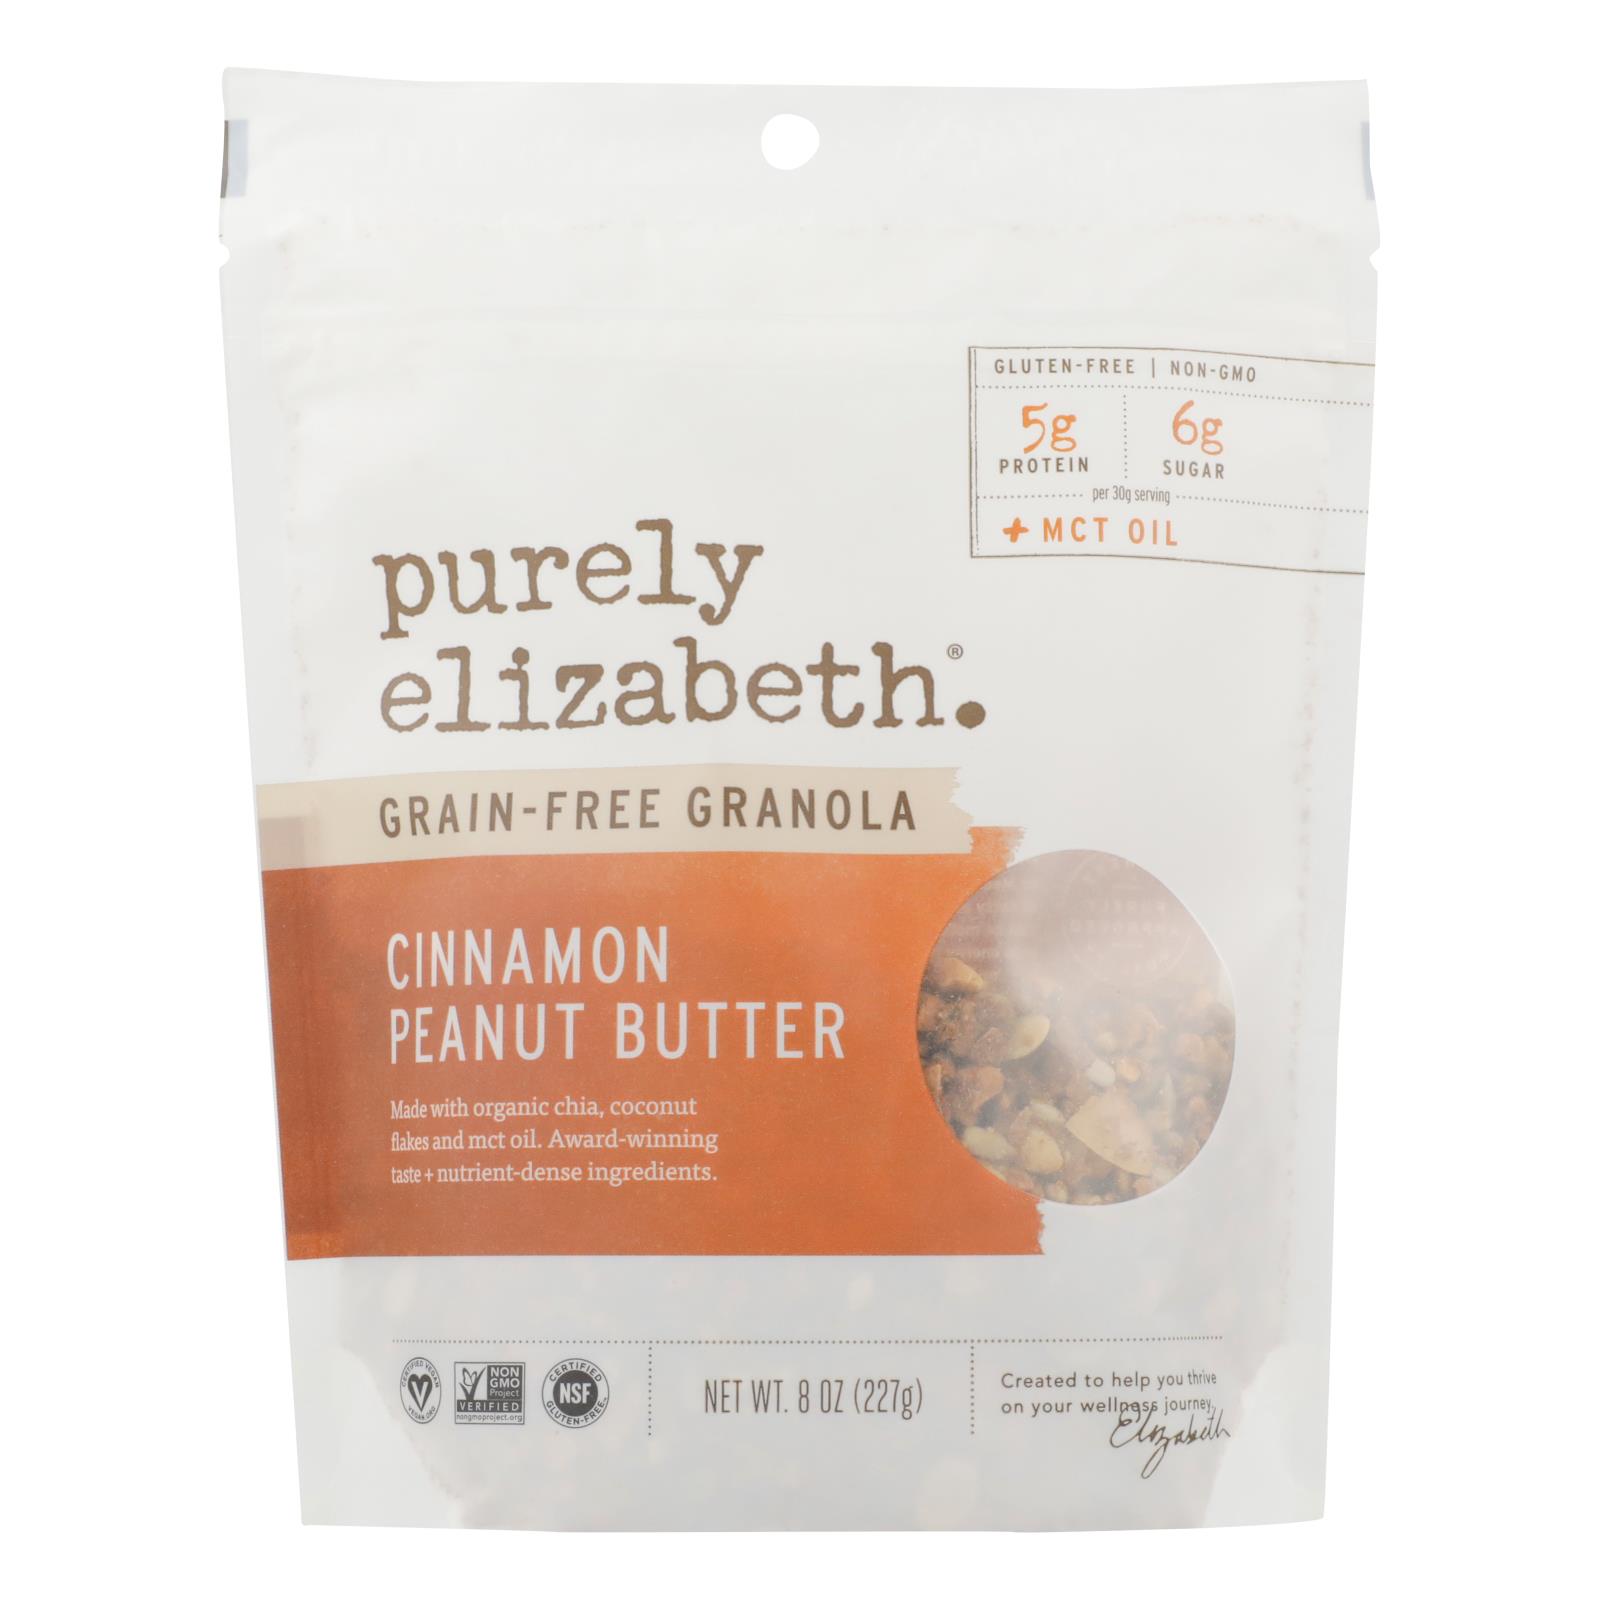 Purely Elizabeth - Gran Gluten Free Cinnamon Peanut Butter - 6개 묶음상품 - 8 OZ